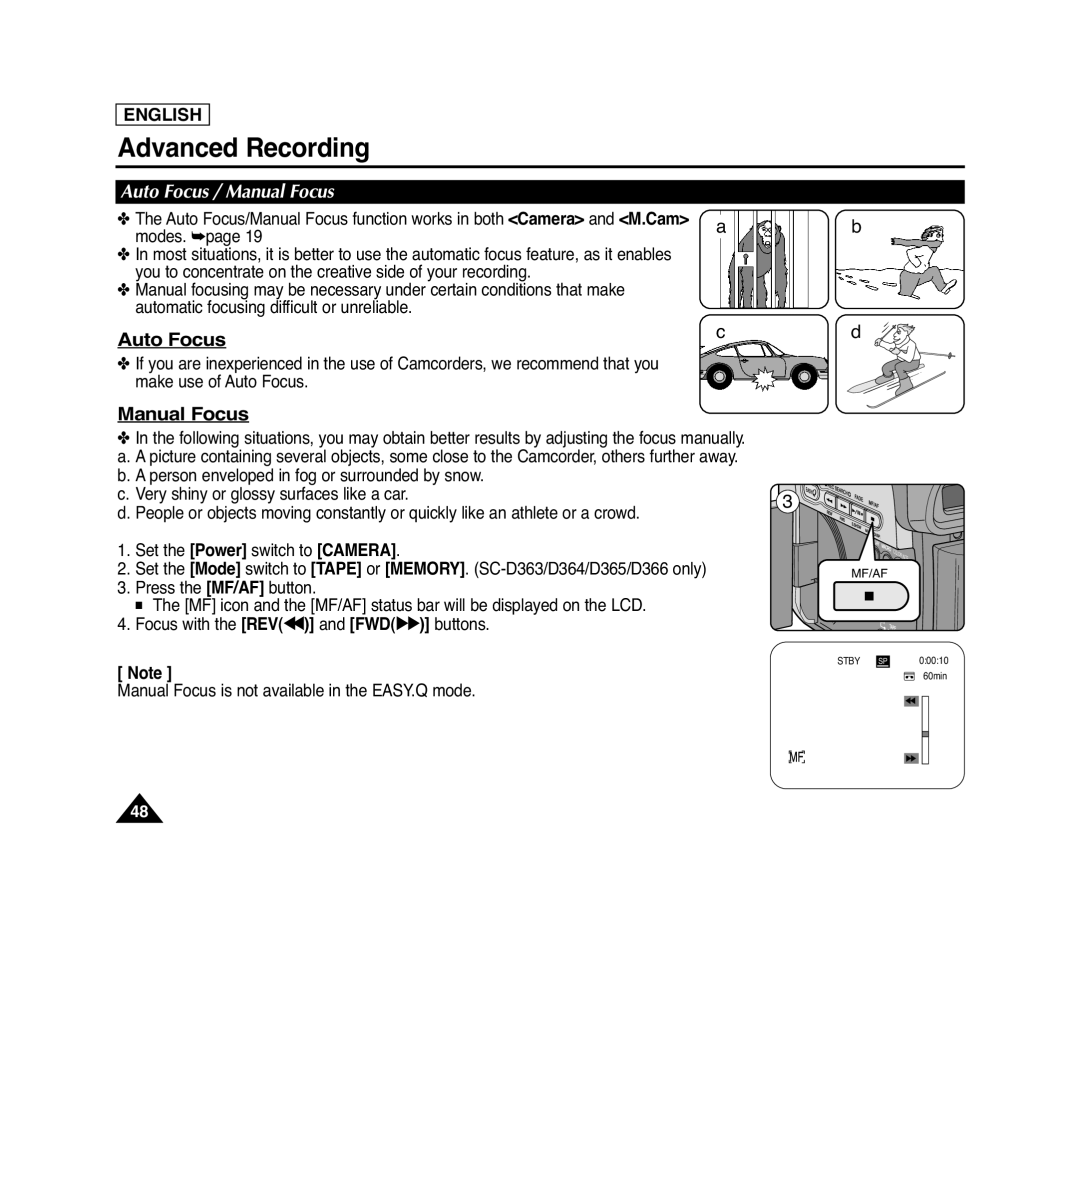 Samsung SC-D263, SC-D366, SC-D364, SC-D362 manual Auto Focus / Manual Focus, modes. page, Advanced Recording, English 